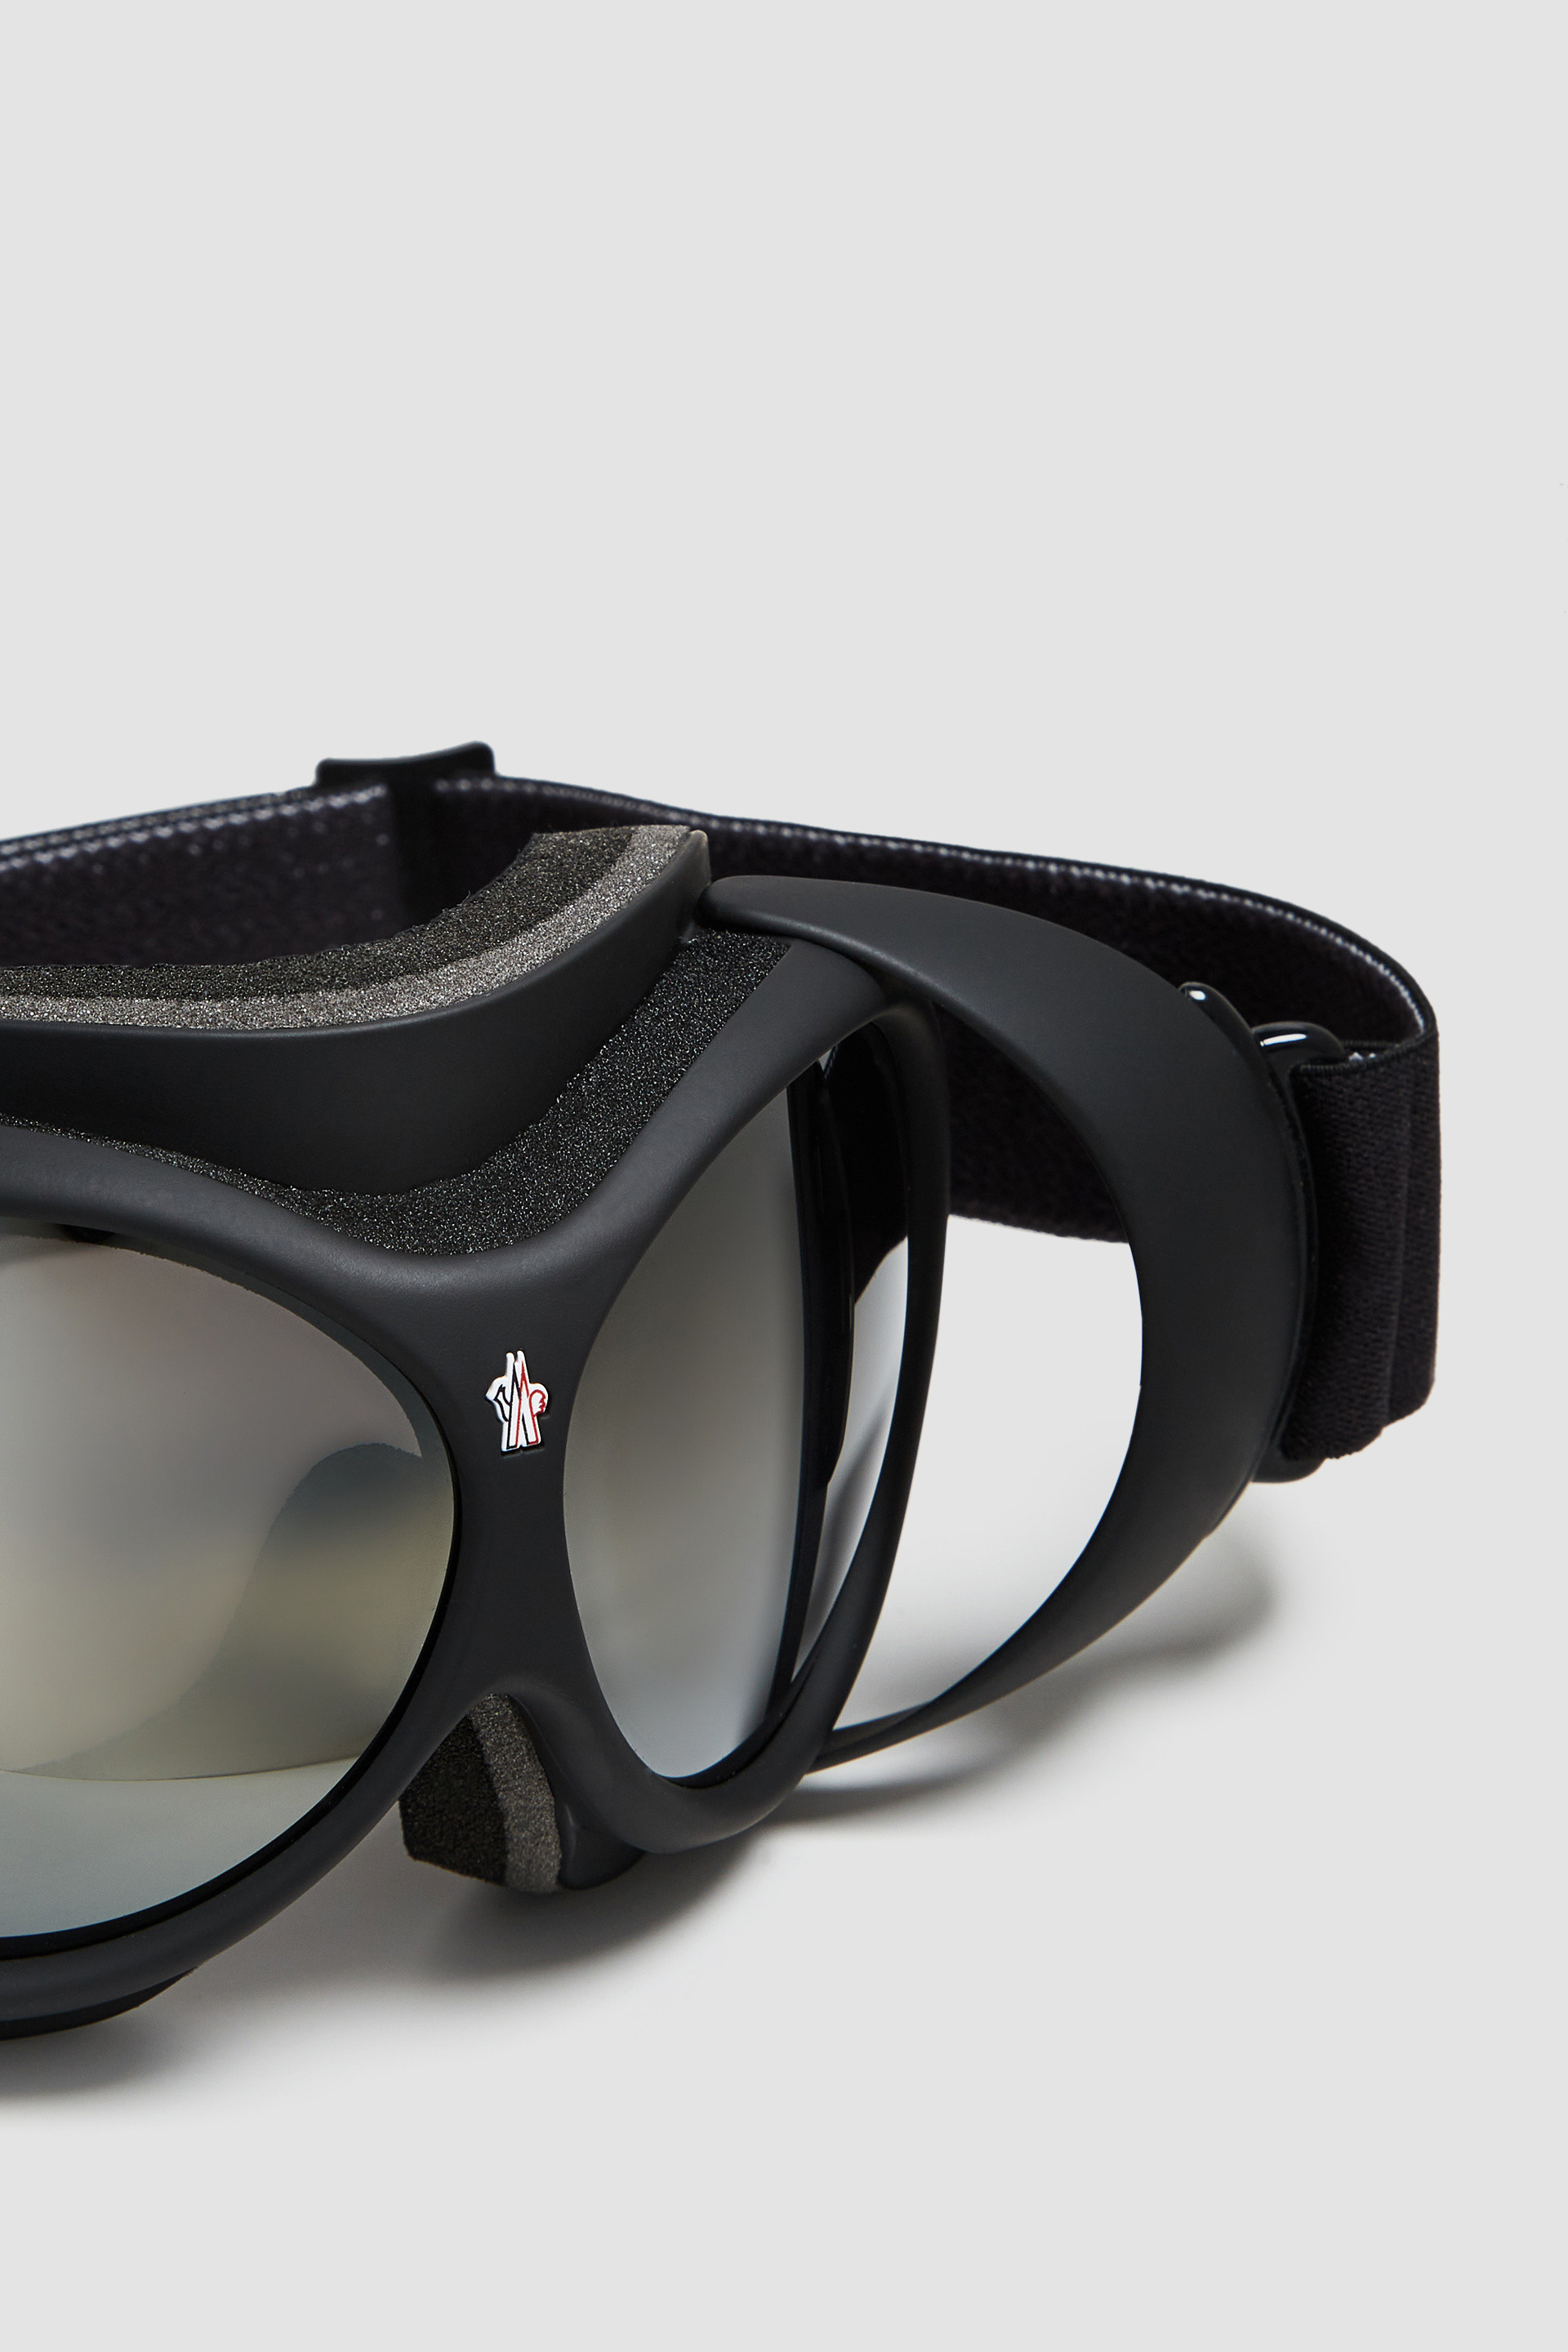 Moncler Masque de Ski ML0130 Black Grey Mirror cat 3 - ML0130 05C - Ski  Goggles - IceOptic